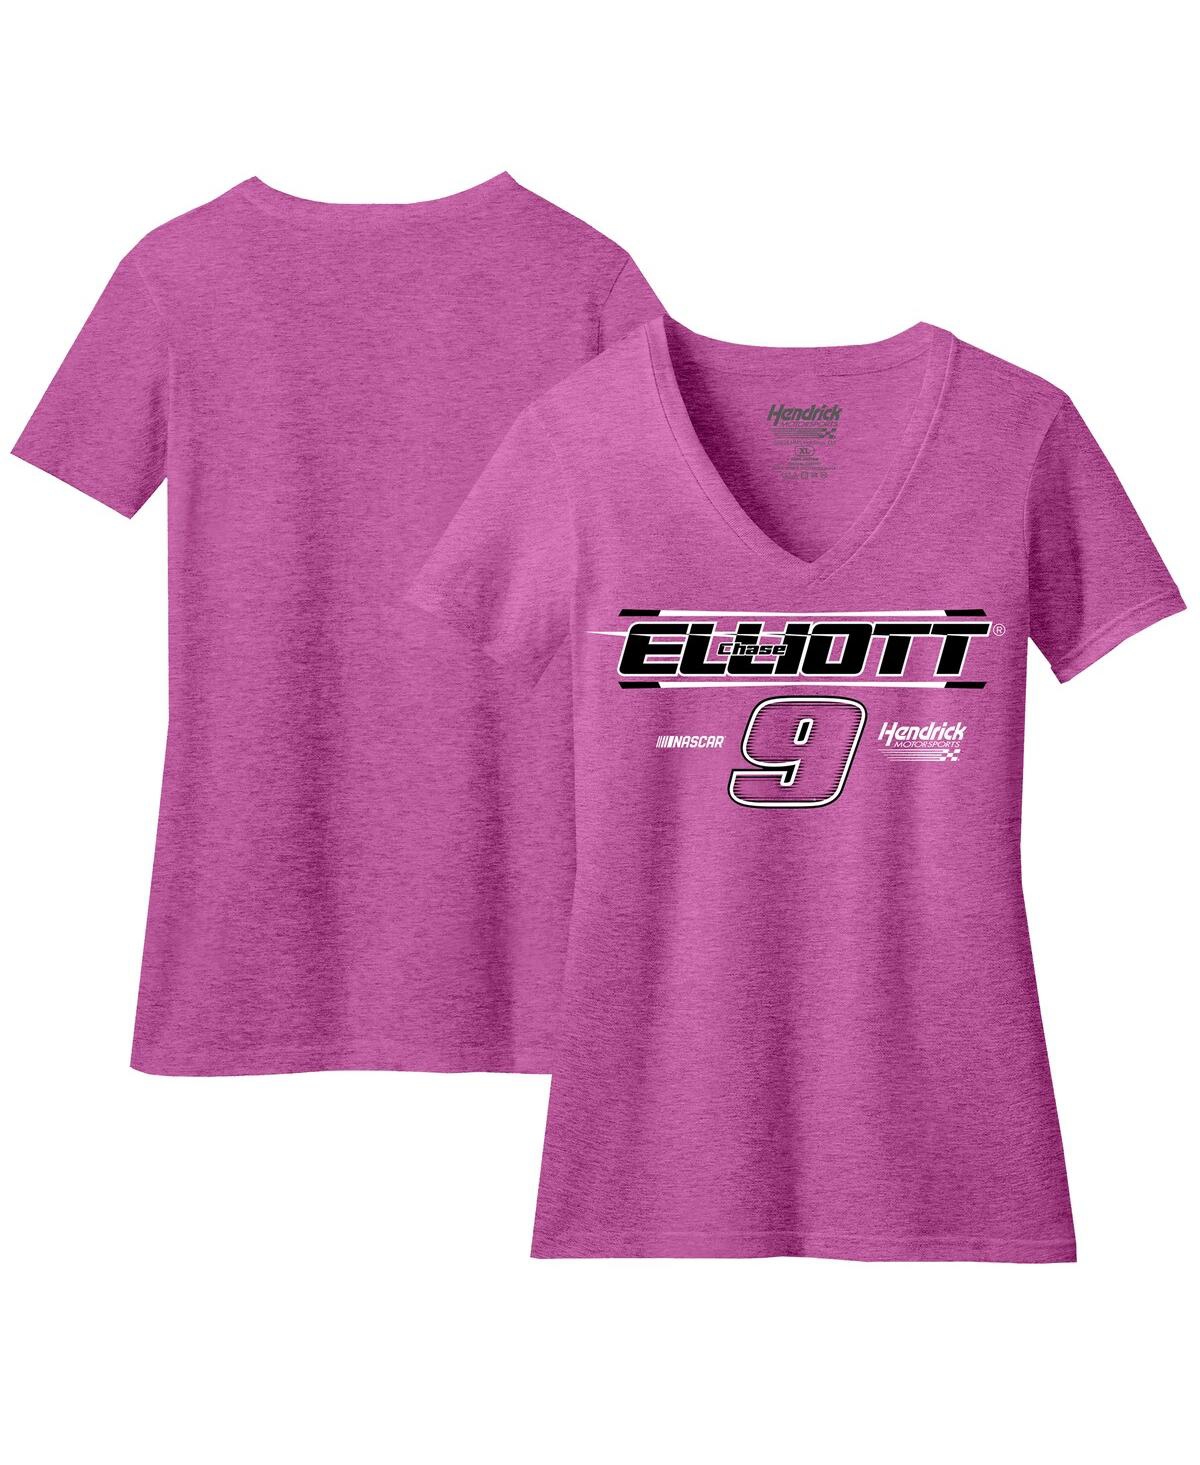 Women's Hendrick Motorsports Team Collection Pink Chase Elliott V-Neck T-shirt - Pink